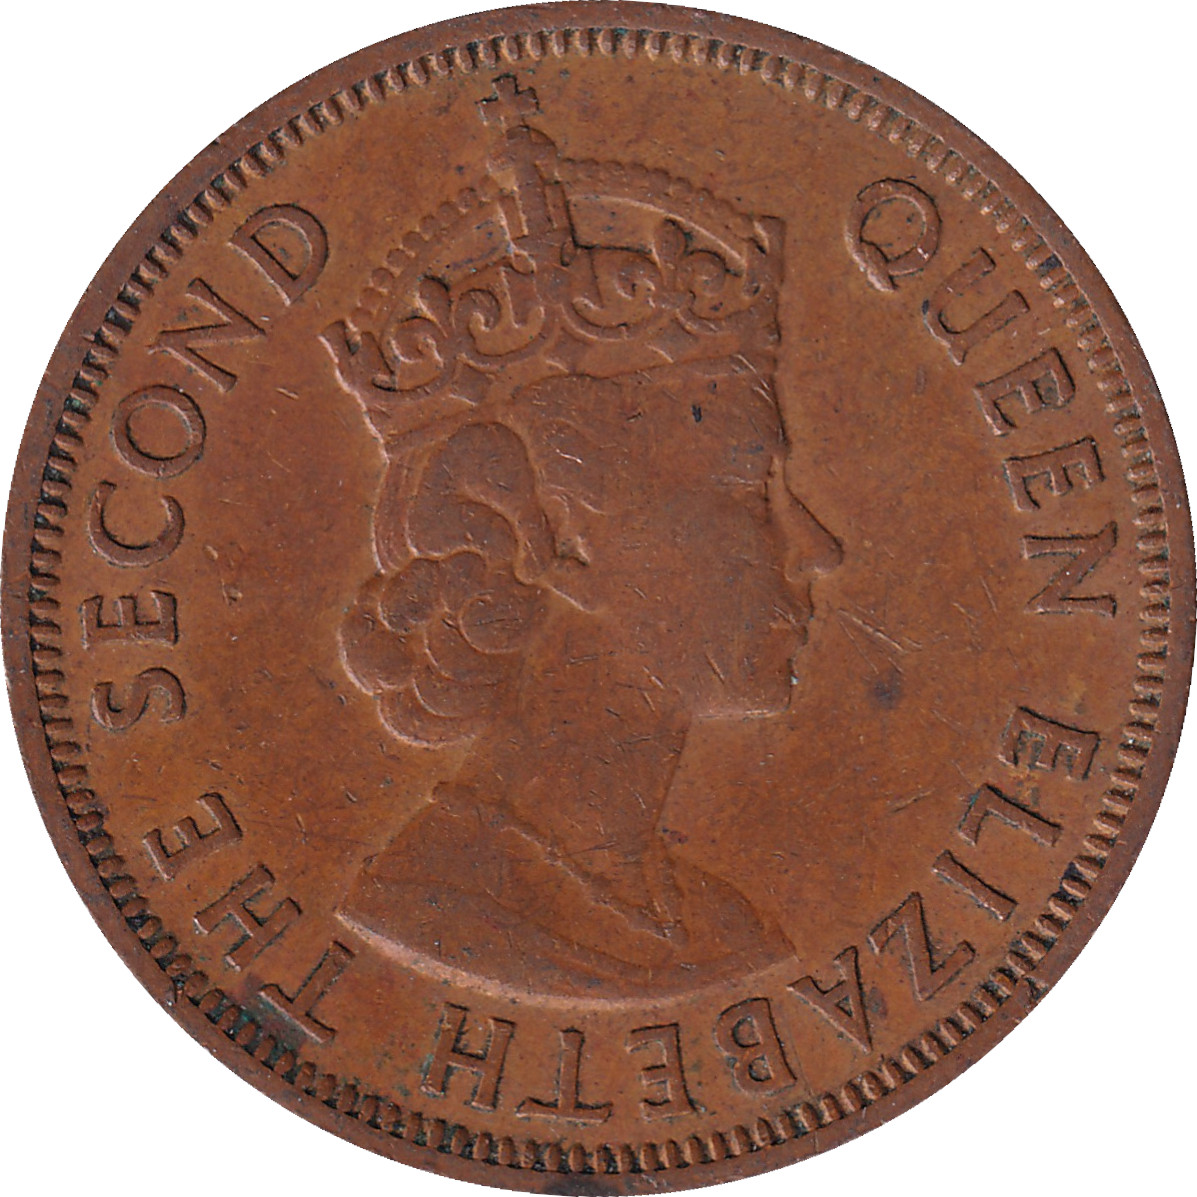 1 cent - Elizabeth II